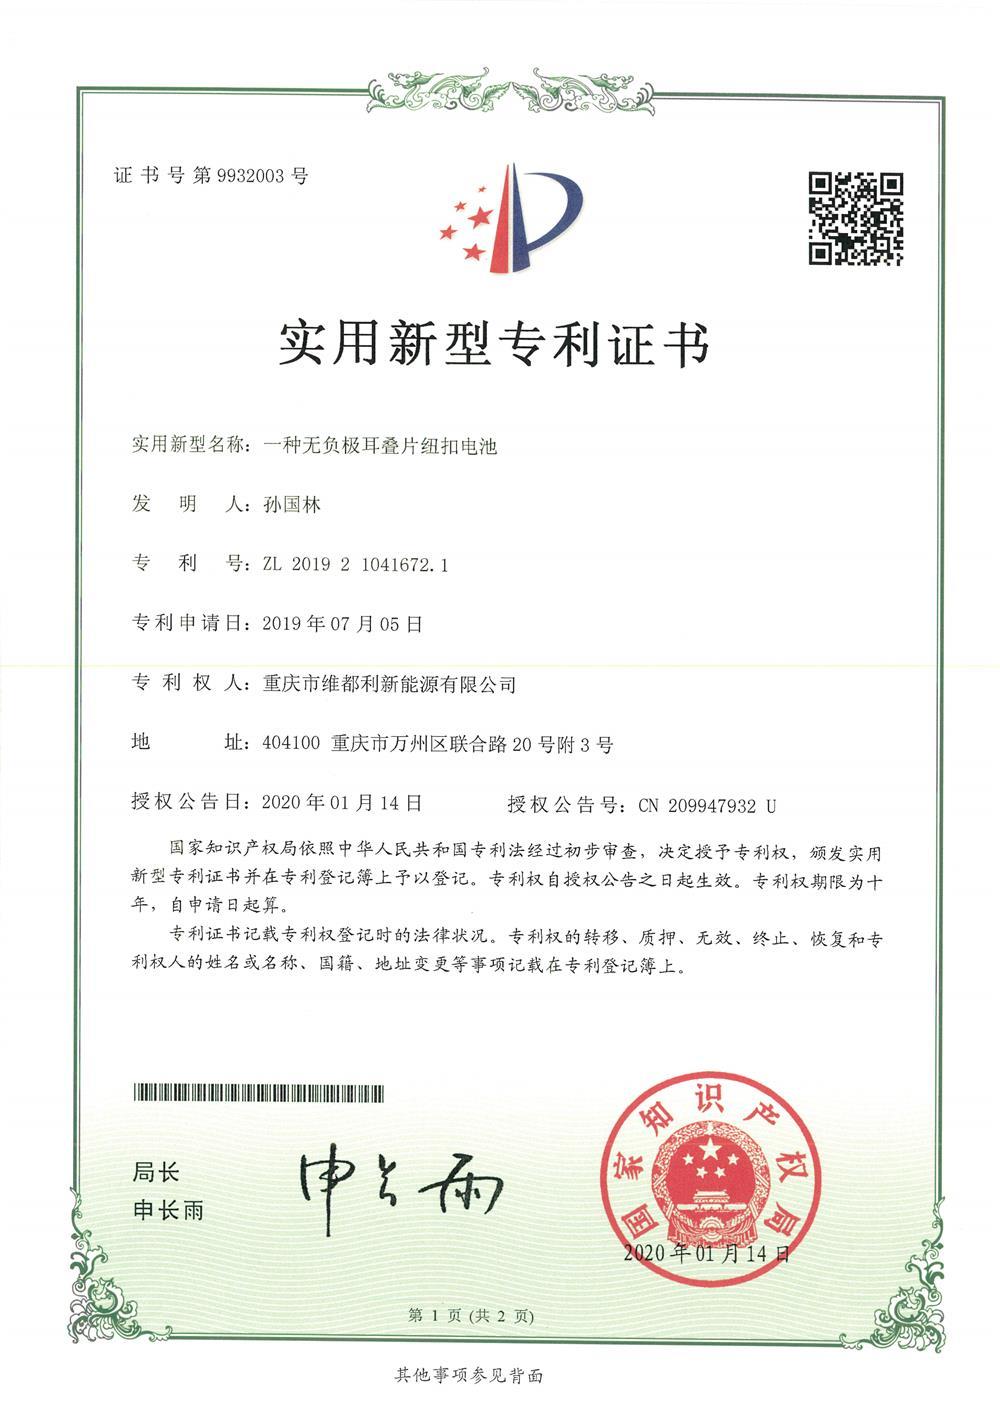 Practical-Certificate